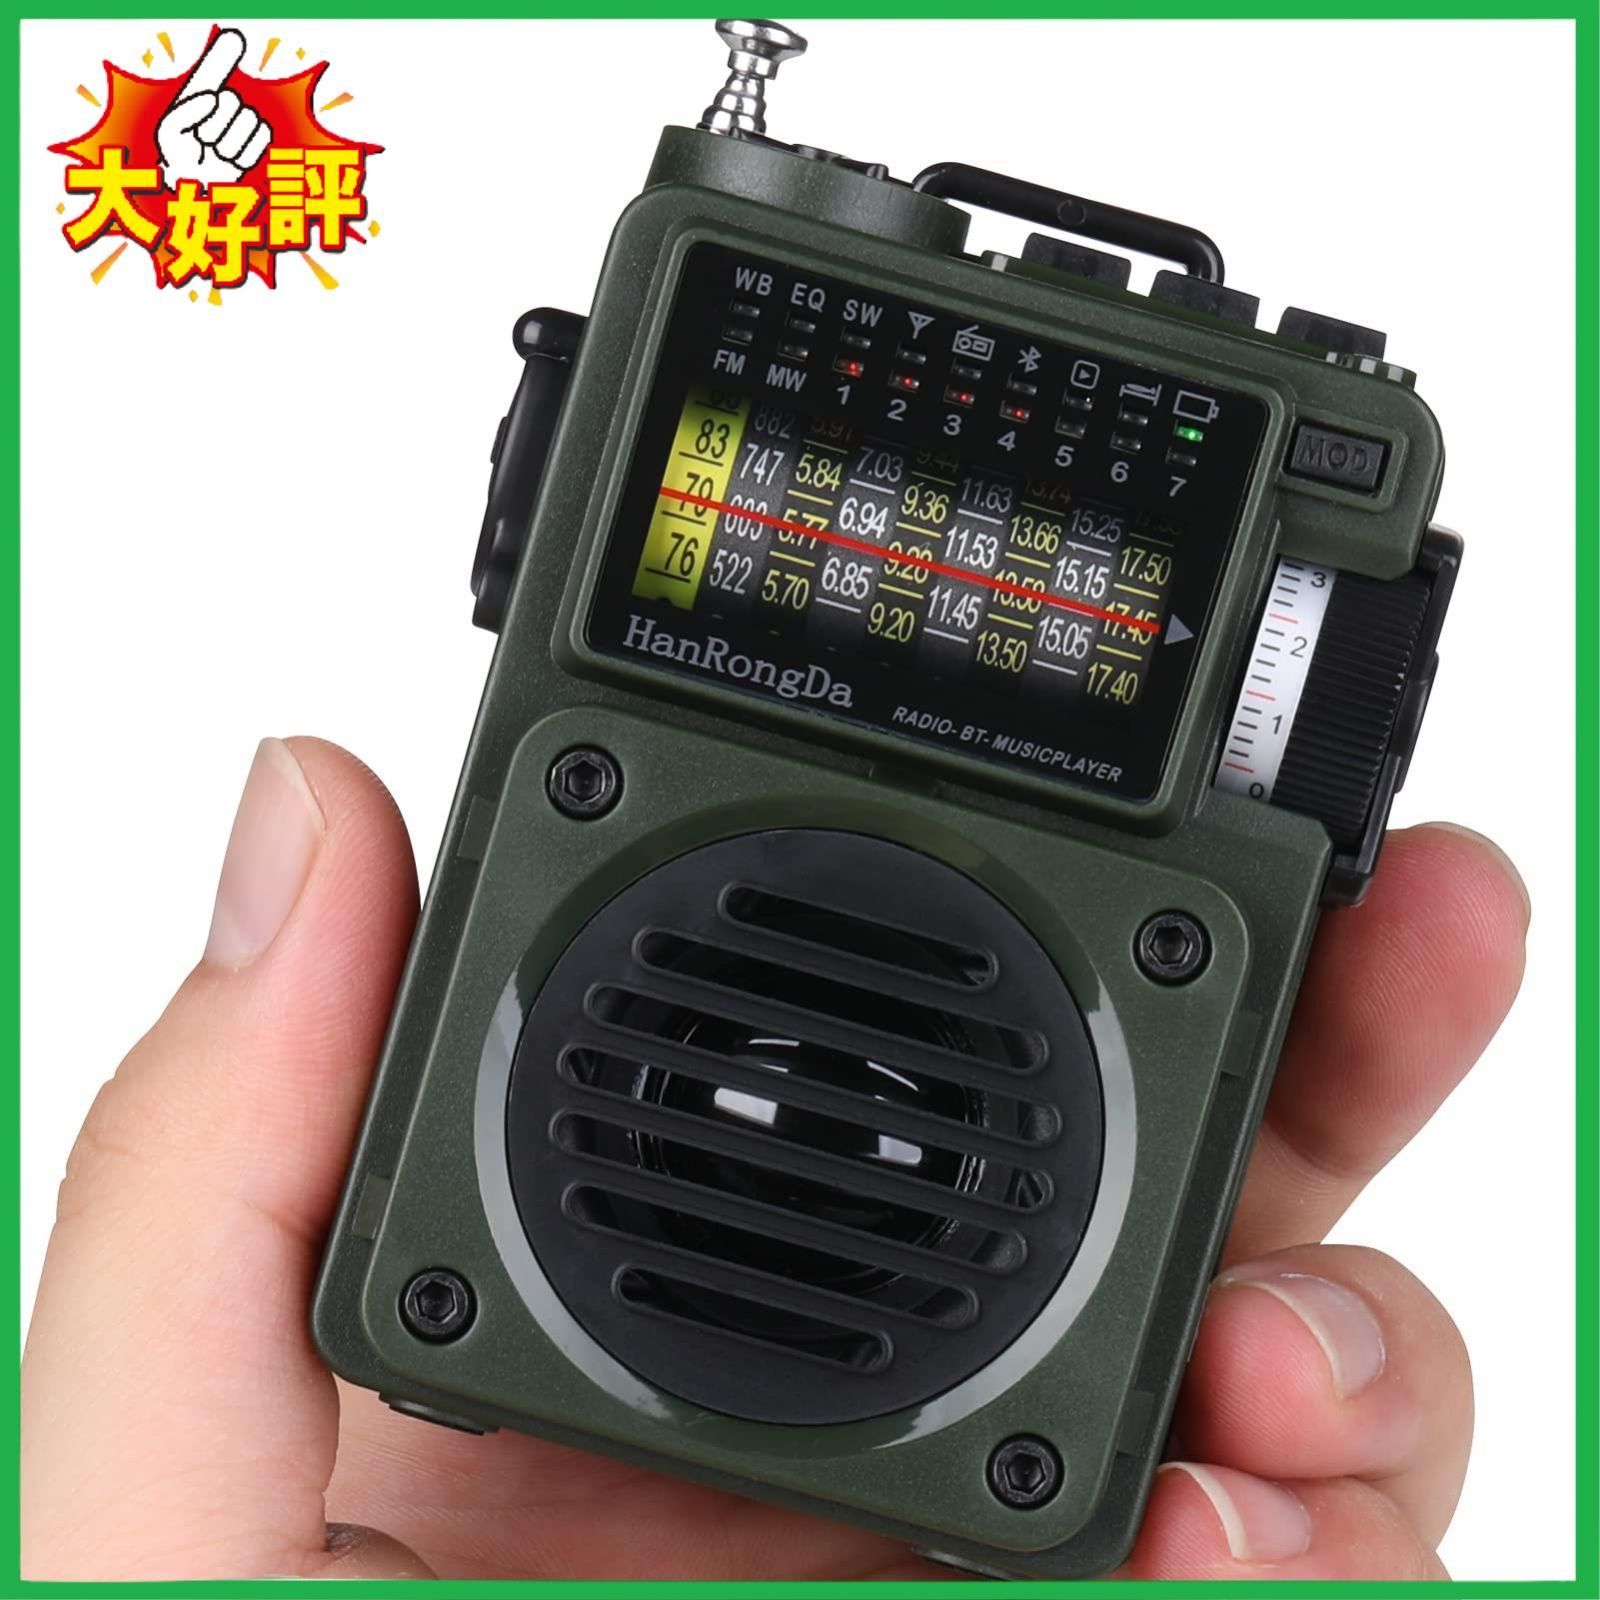 HanRongDa Bluetoothスピーカー 小型BCLラジオ MicroSDカード対応 FMAM短波ワイドFM対応 式 MP3レトロプレーヤー  タイマー アナログ目盛 日本仕様 アウトドア 防災 旅行に最適 HRD700